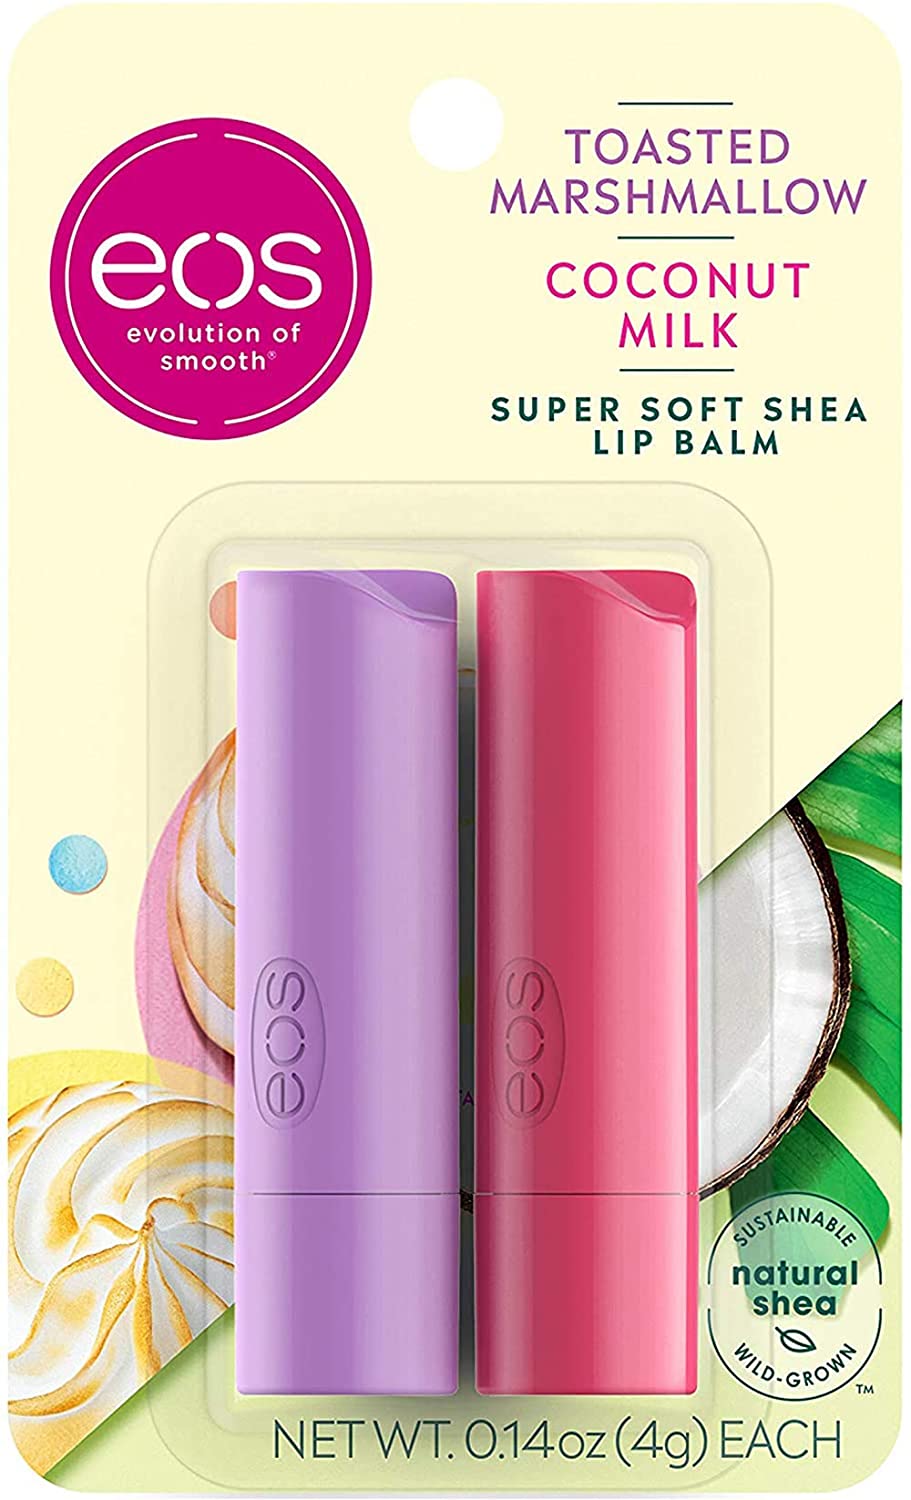 eos 01912 Super Soft Shea Lip Balm Stick 2 Pack USA